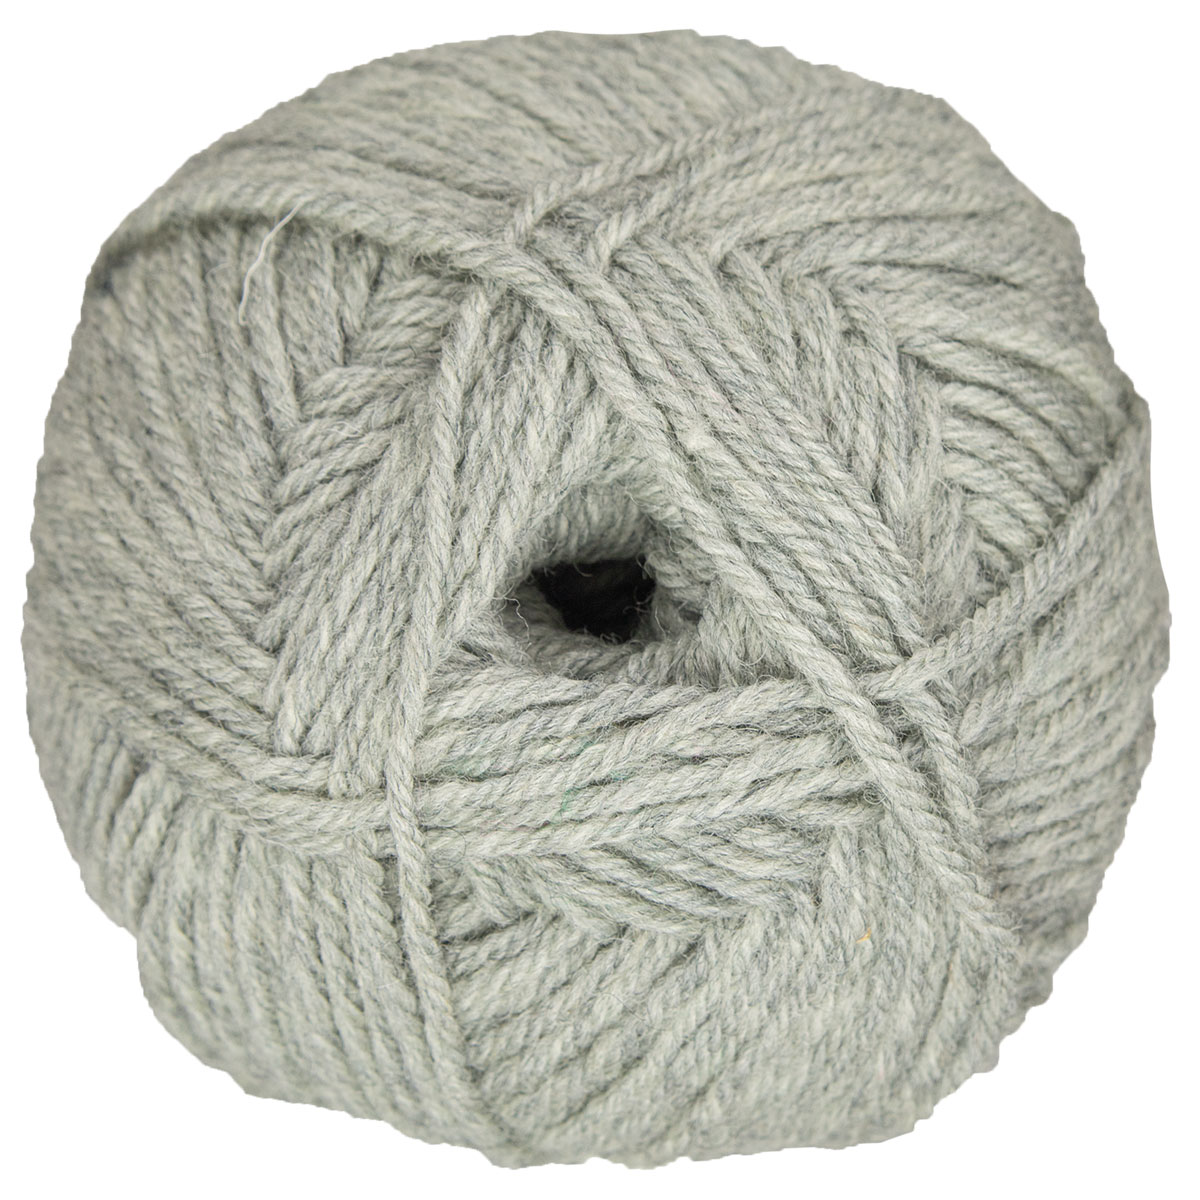 Rowan Pure Wool Superwash Worsted Yarn - 112 Moonstone